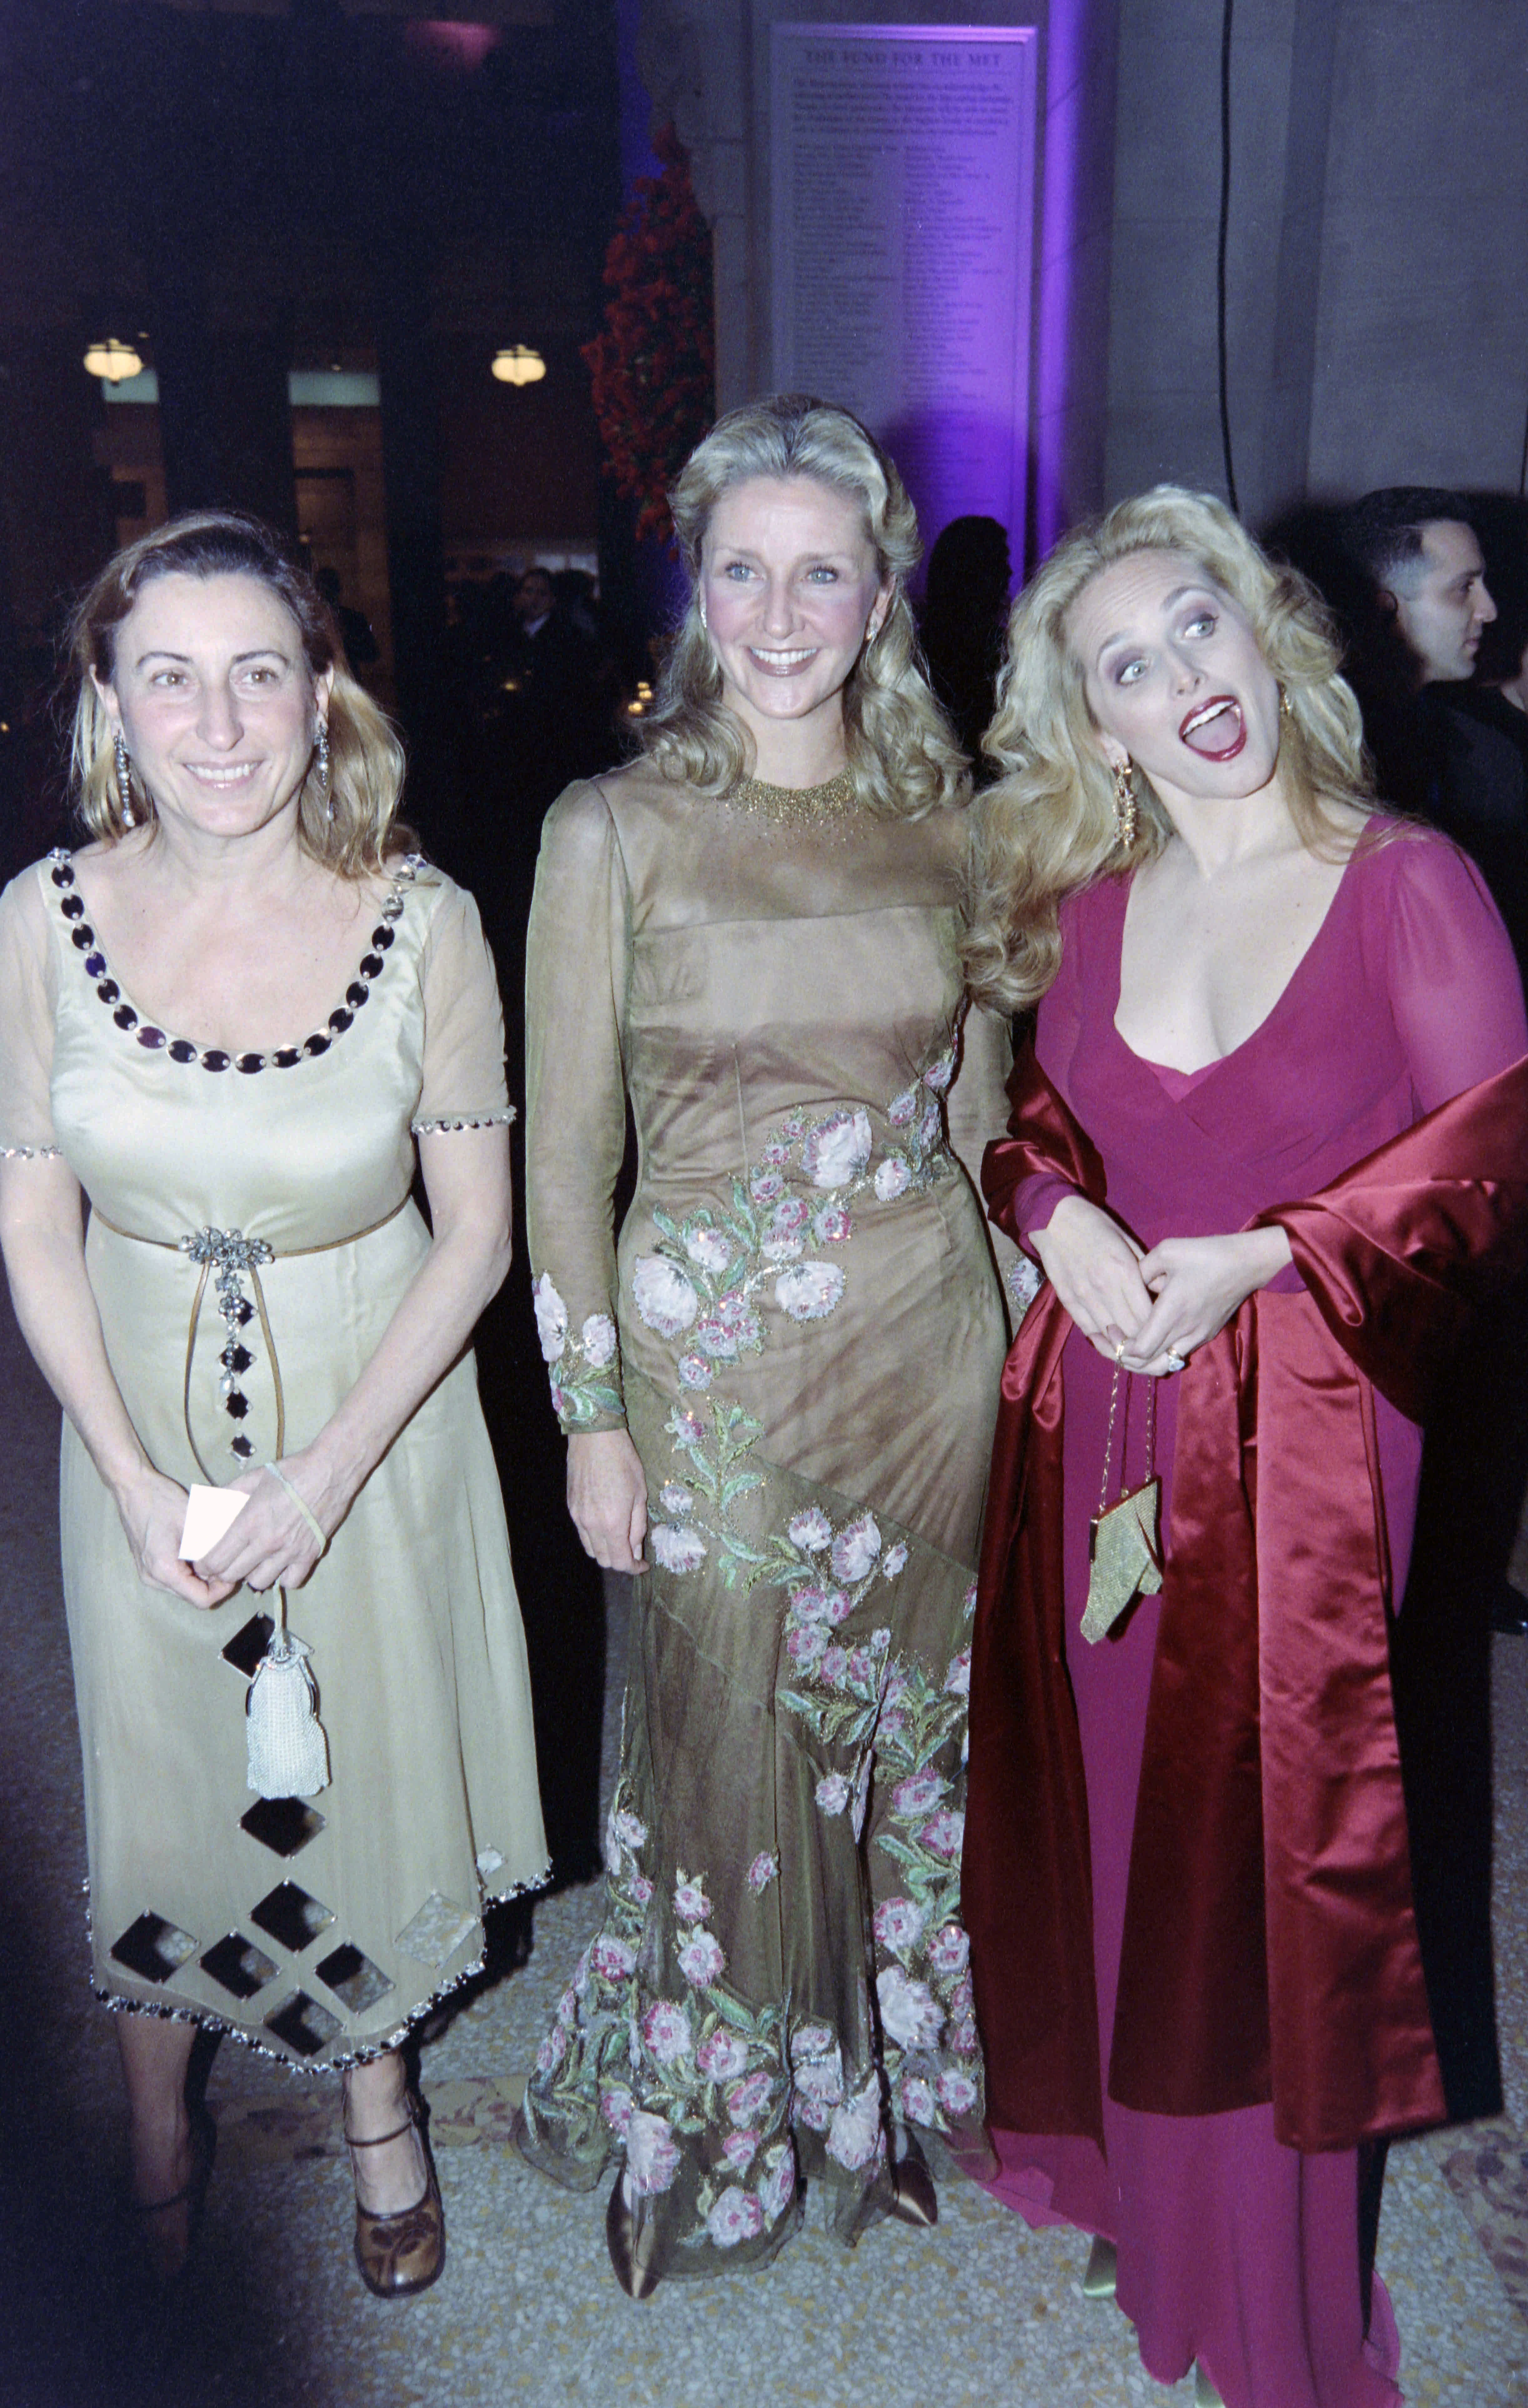 (L-R) Miuccia Prada, Paula Cussi, and Pia Getty attend the Costume Institute Gala at the Metropolitan Museum of Art in New York City on December 7, 1998. (Photo by Steve Eichner/WWD/Penske Media via Getty Images)